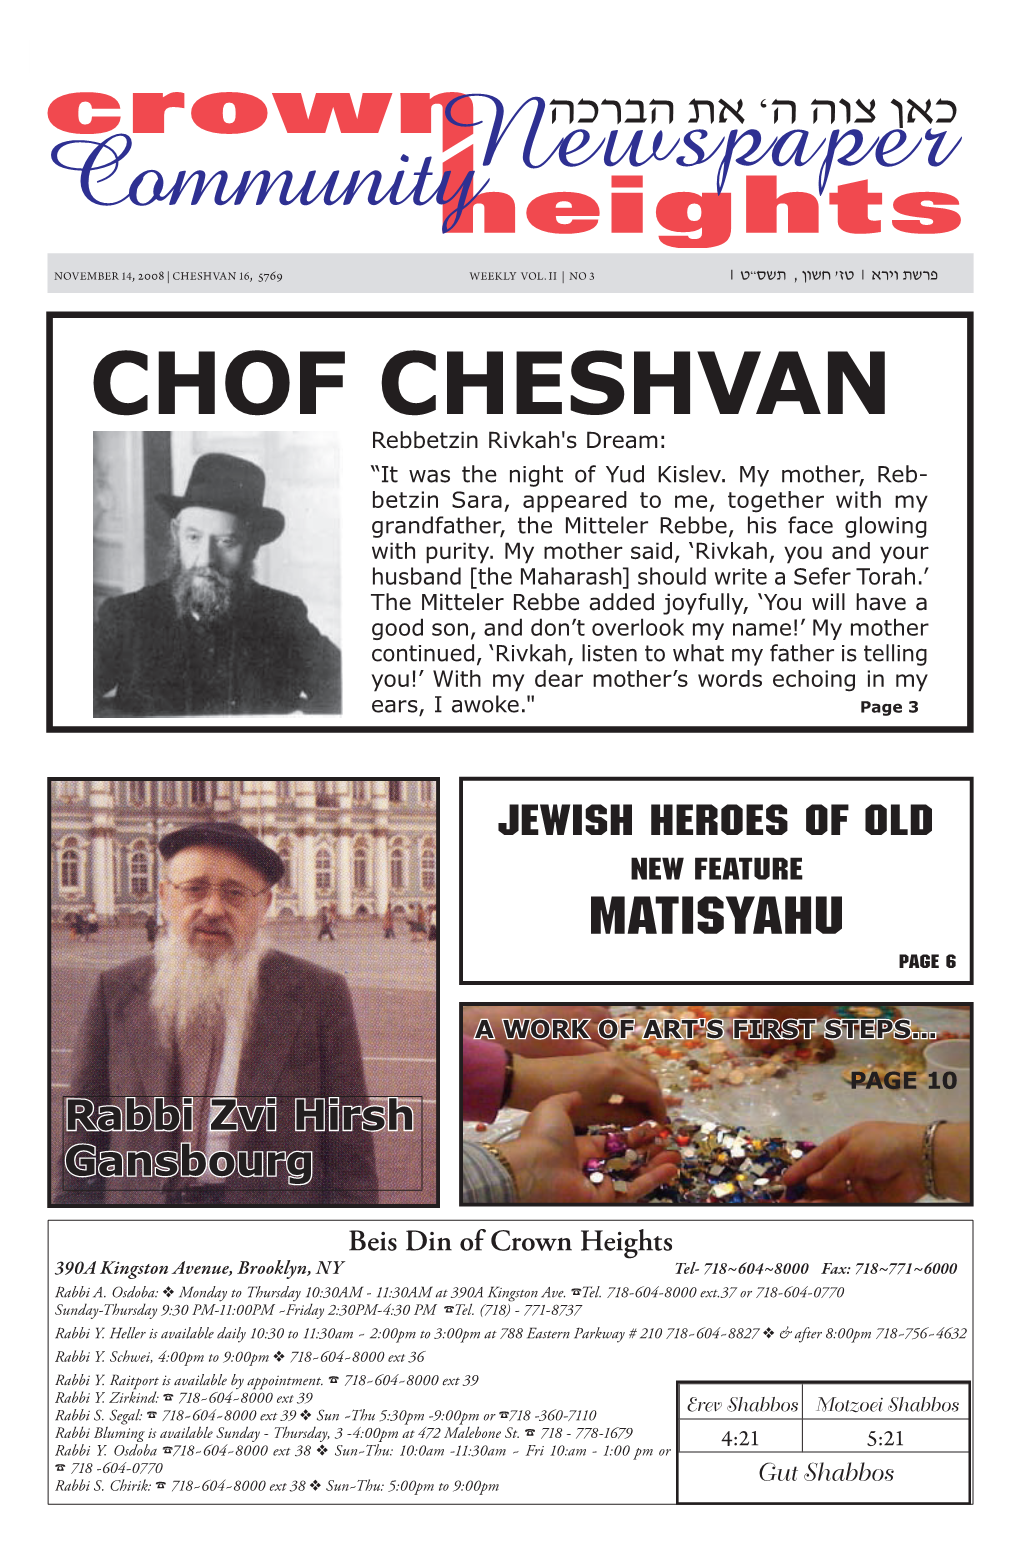 CHOF CHESHVAN Rebbetzin Rivkah's Dream: “It Was the Night of Yud Kislev